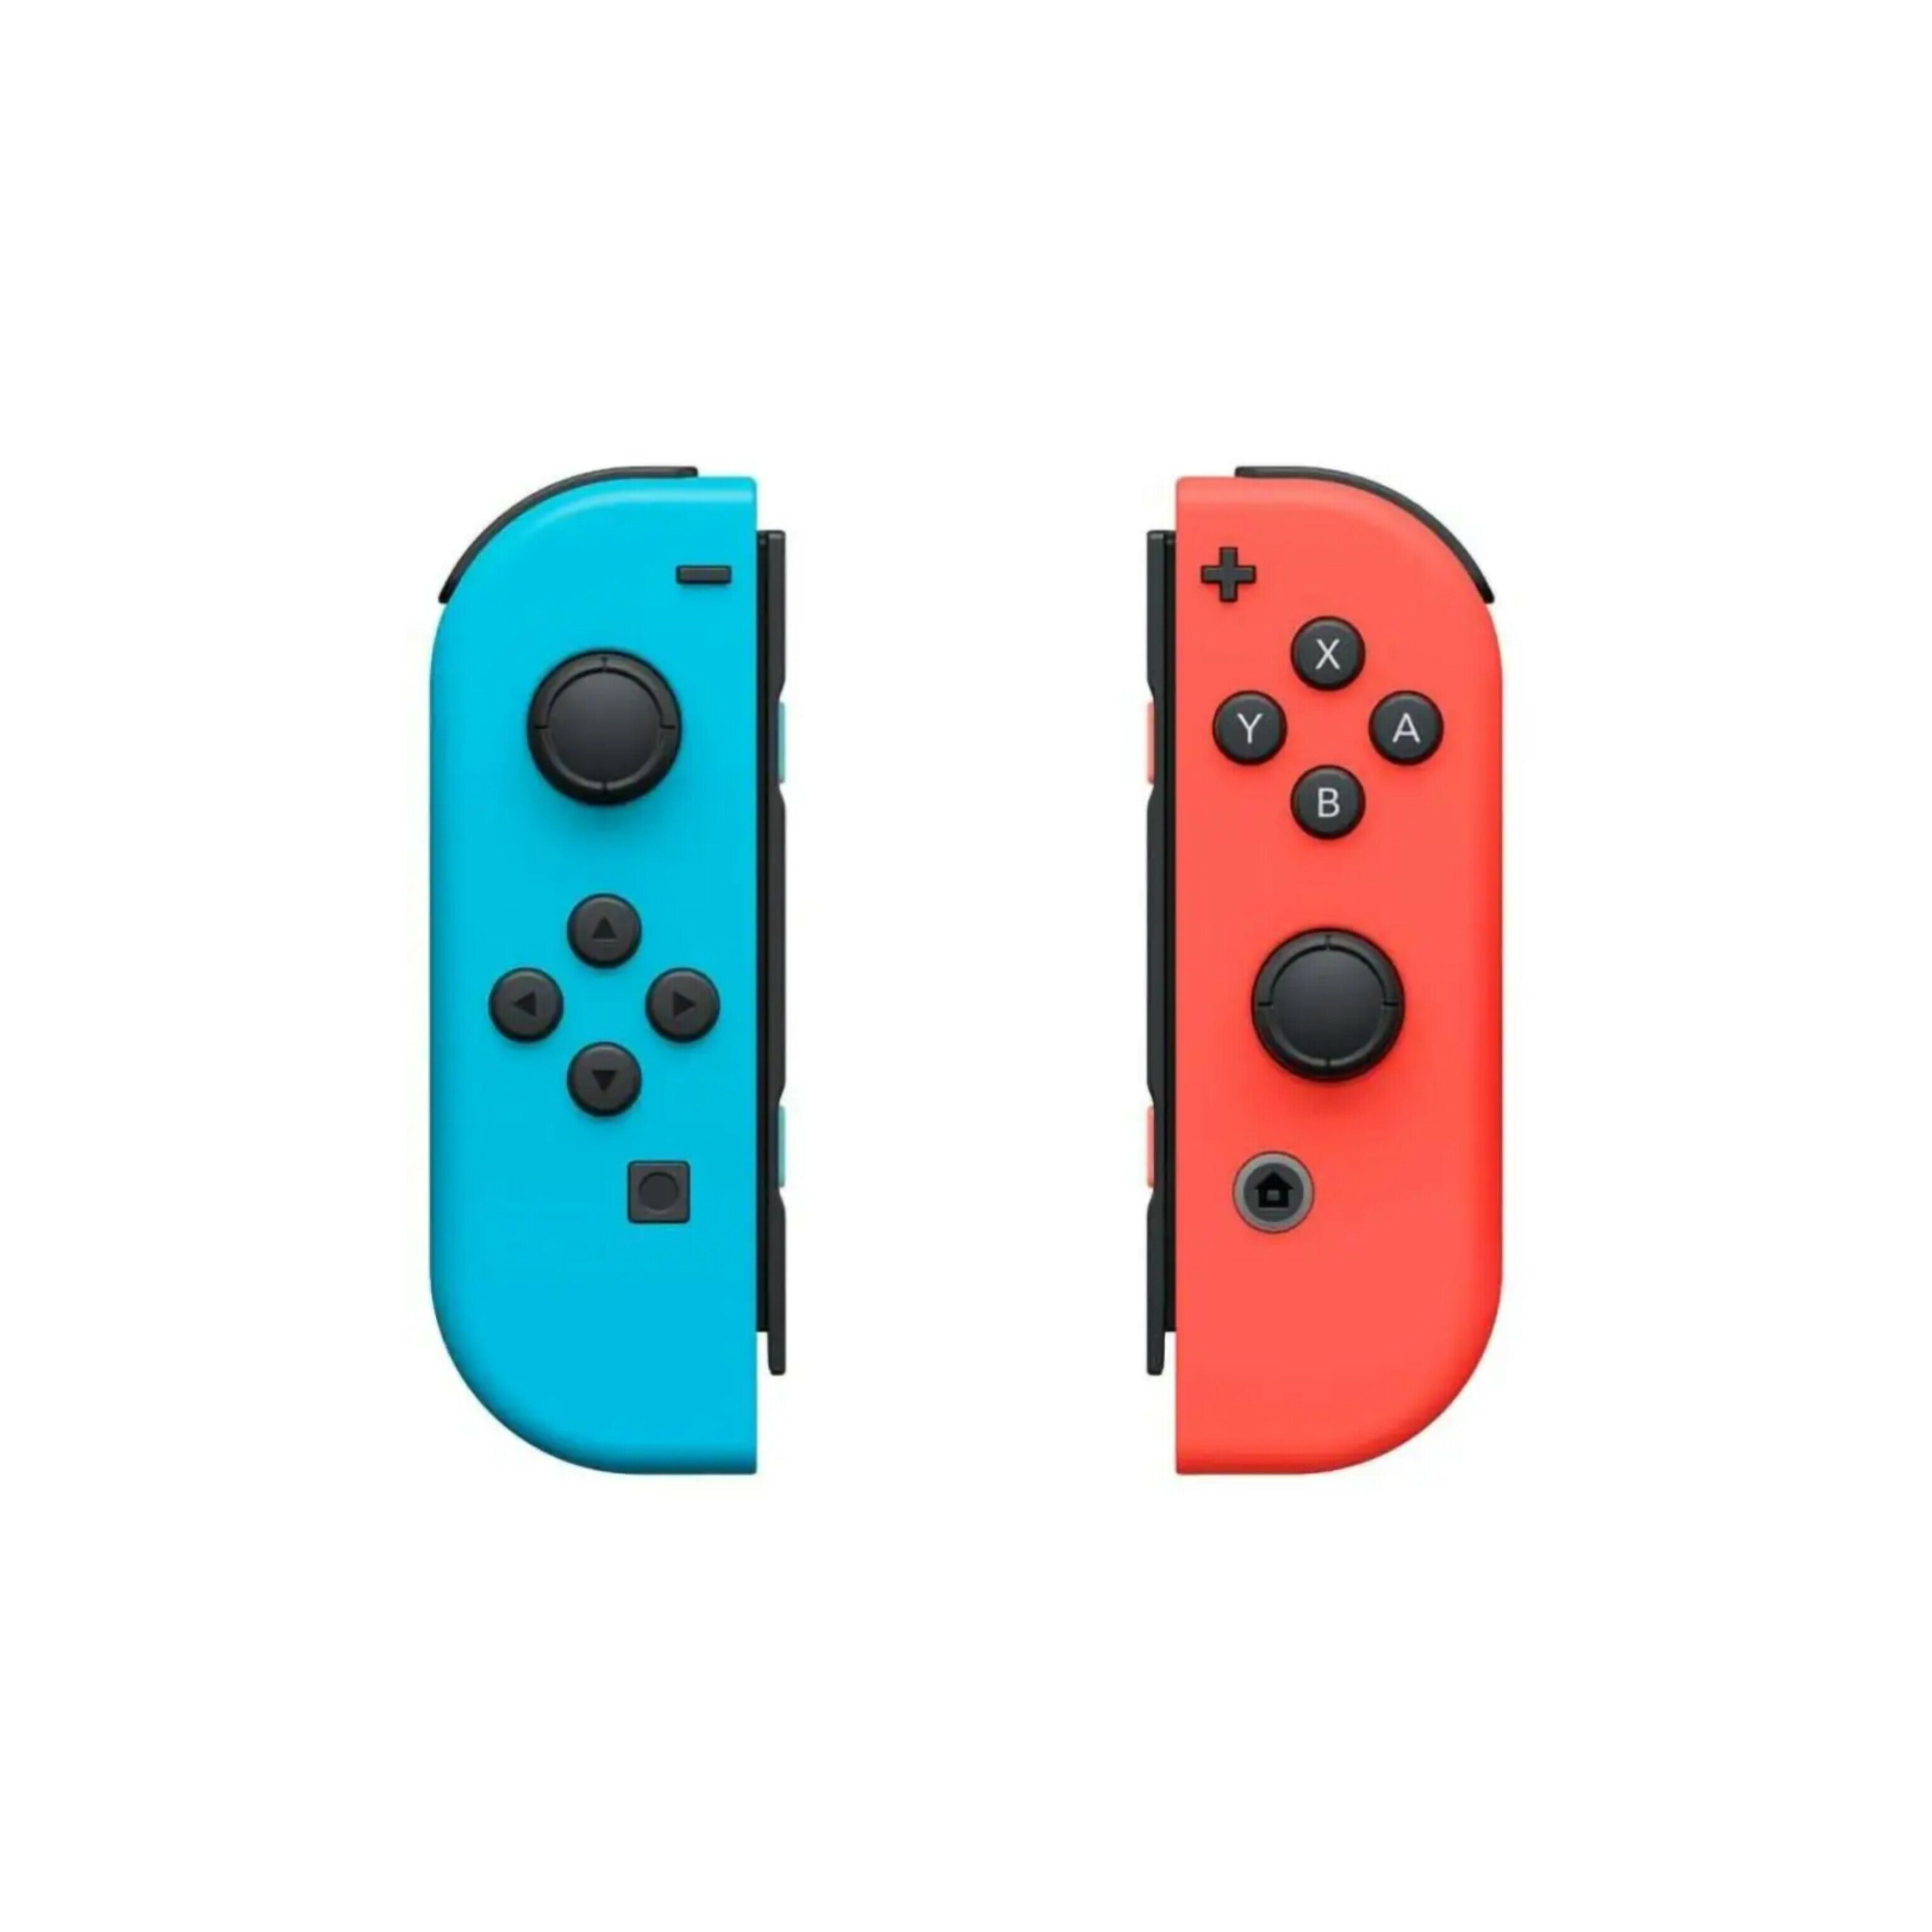 Геймпад для Nintendo Switch совместимый, 2 контроллера Joy-Con